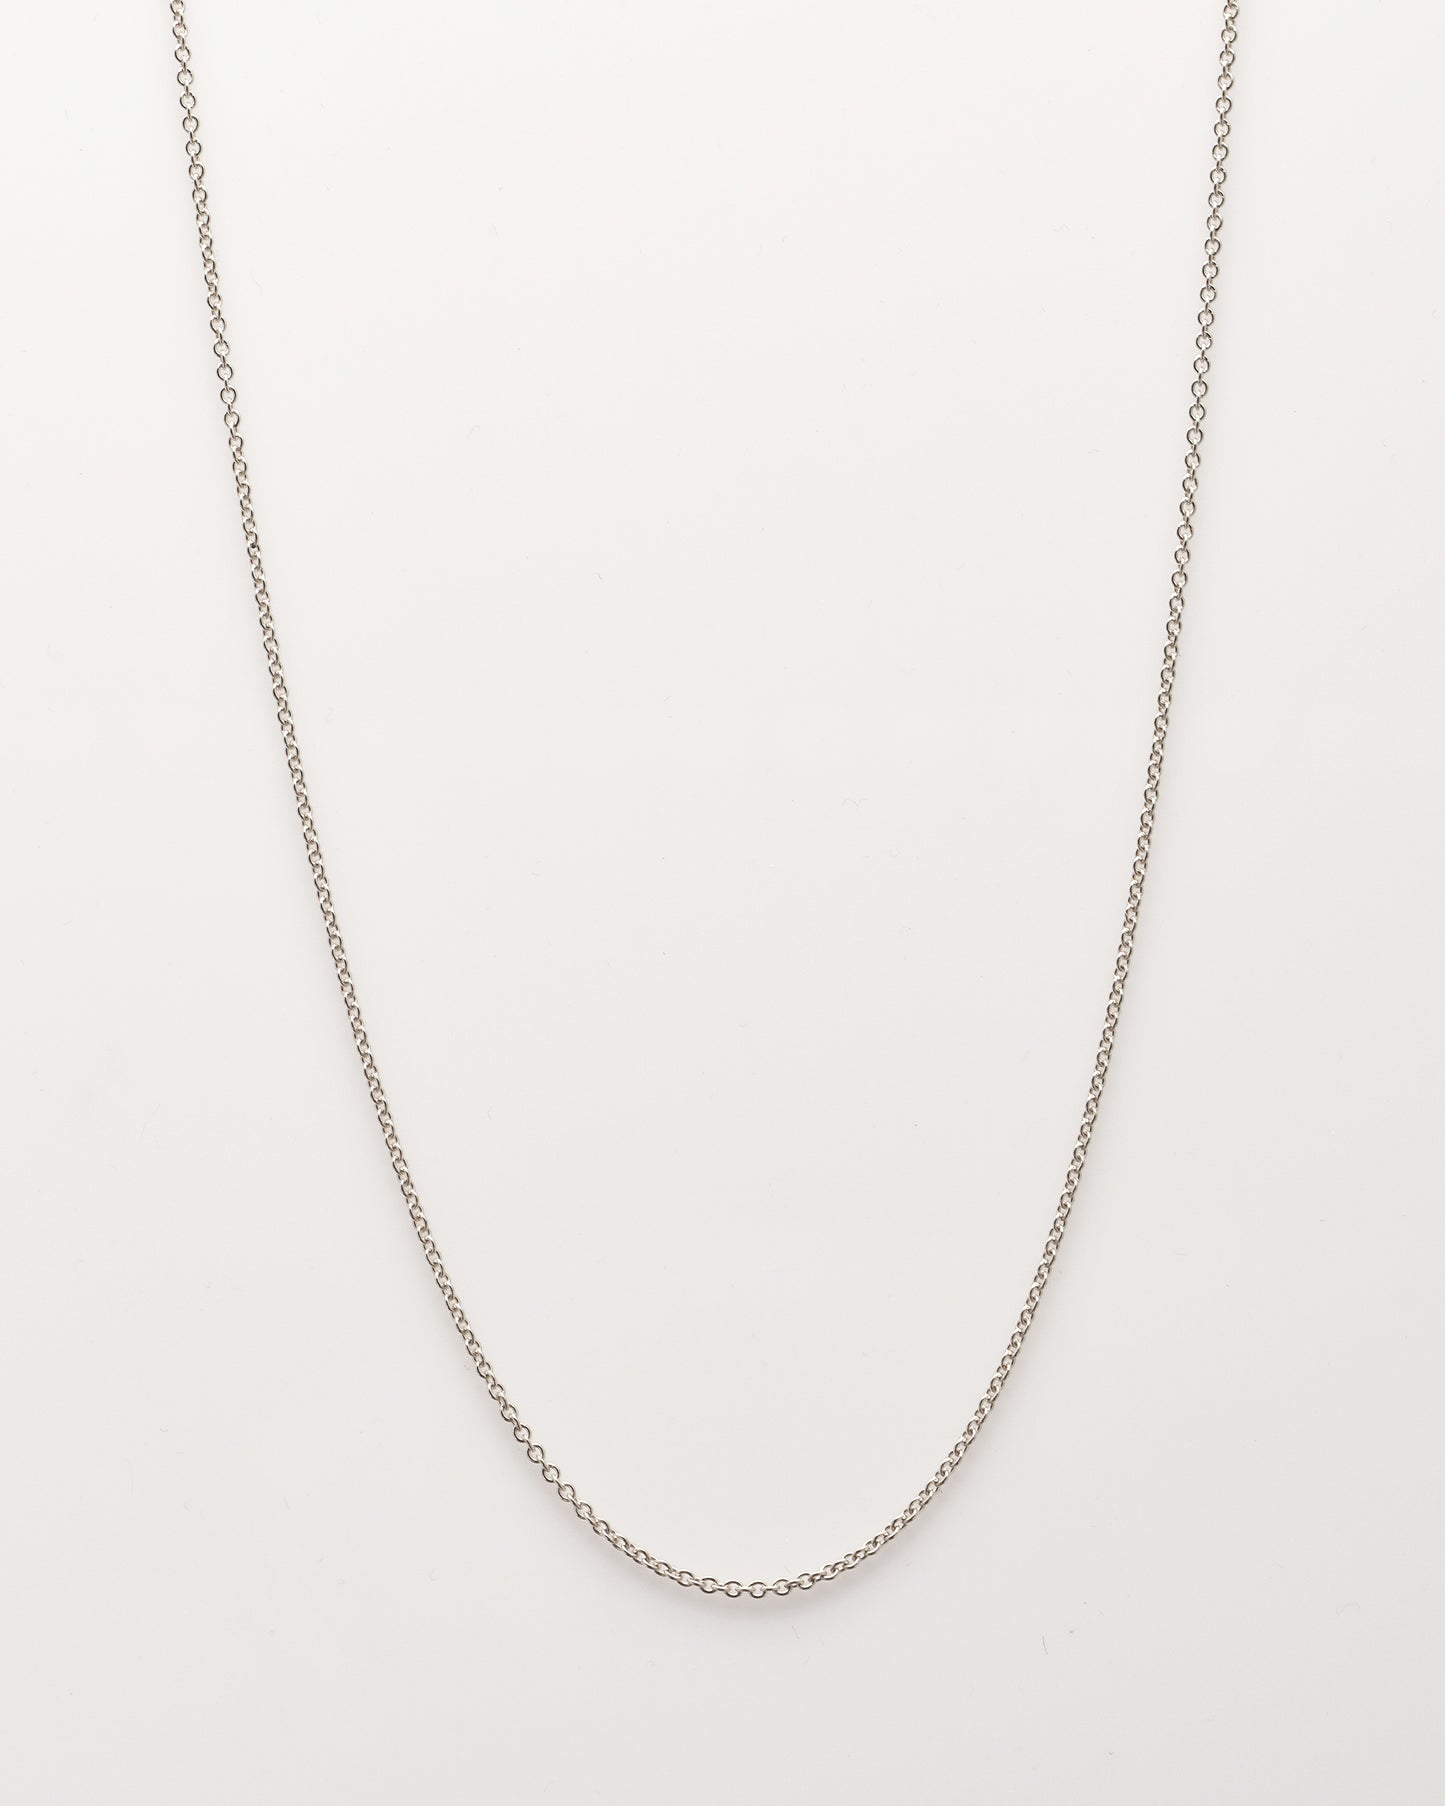 Fine Necklace Chain in 18ct White Gold